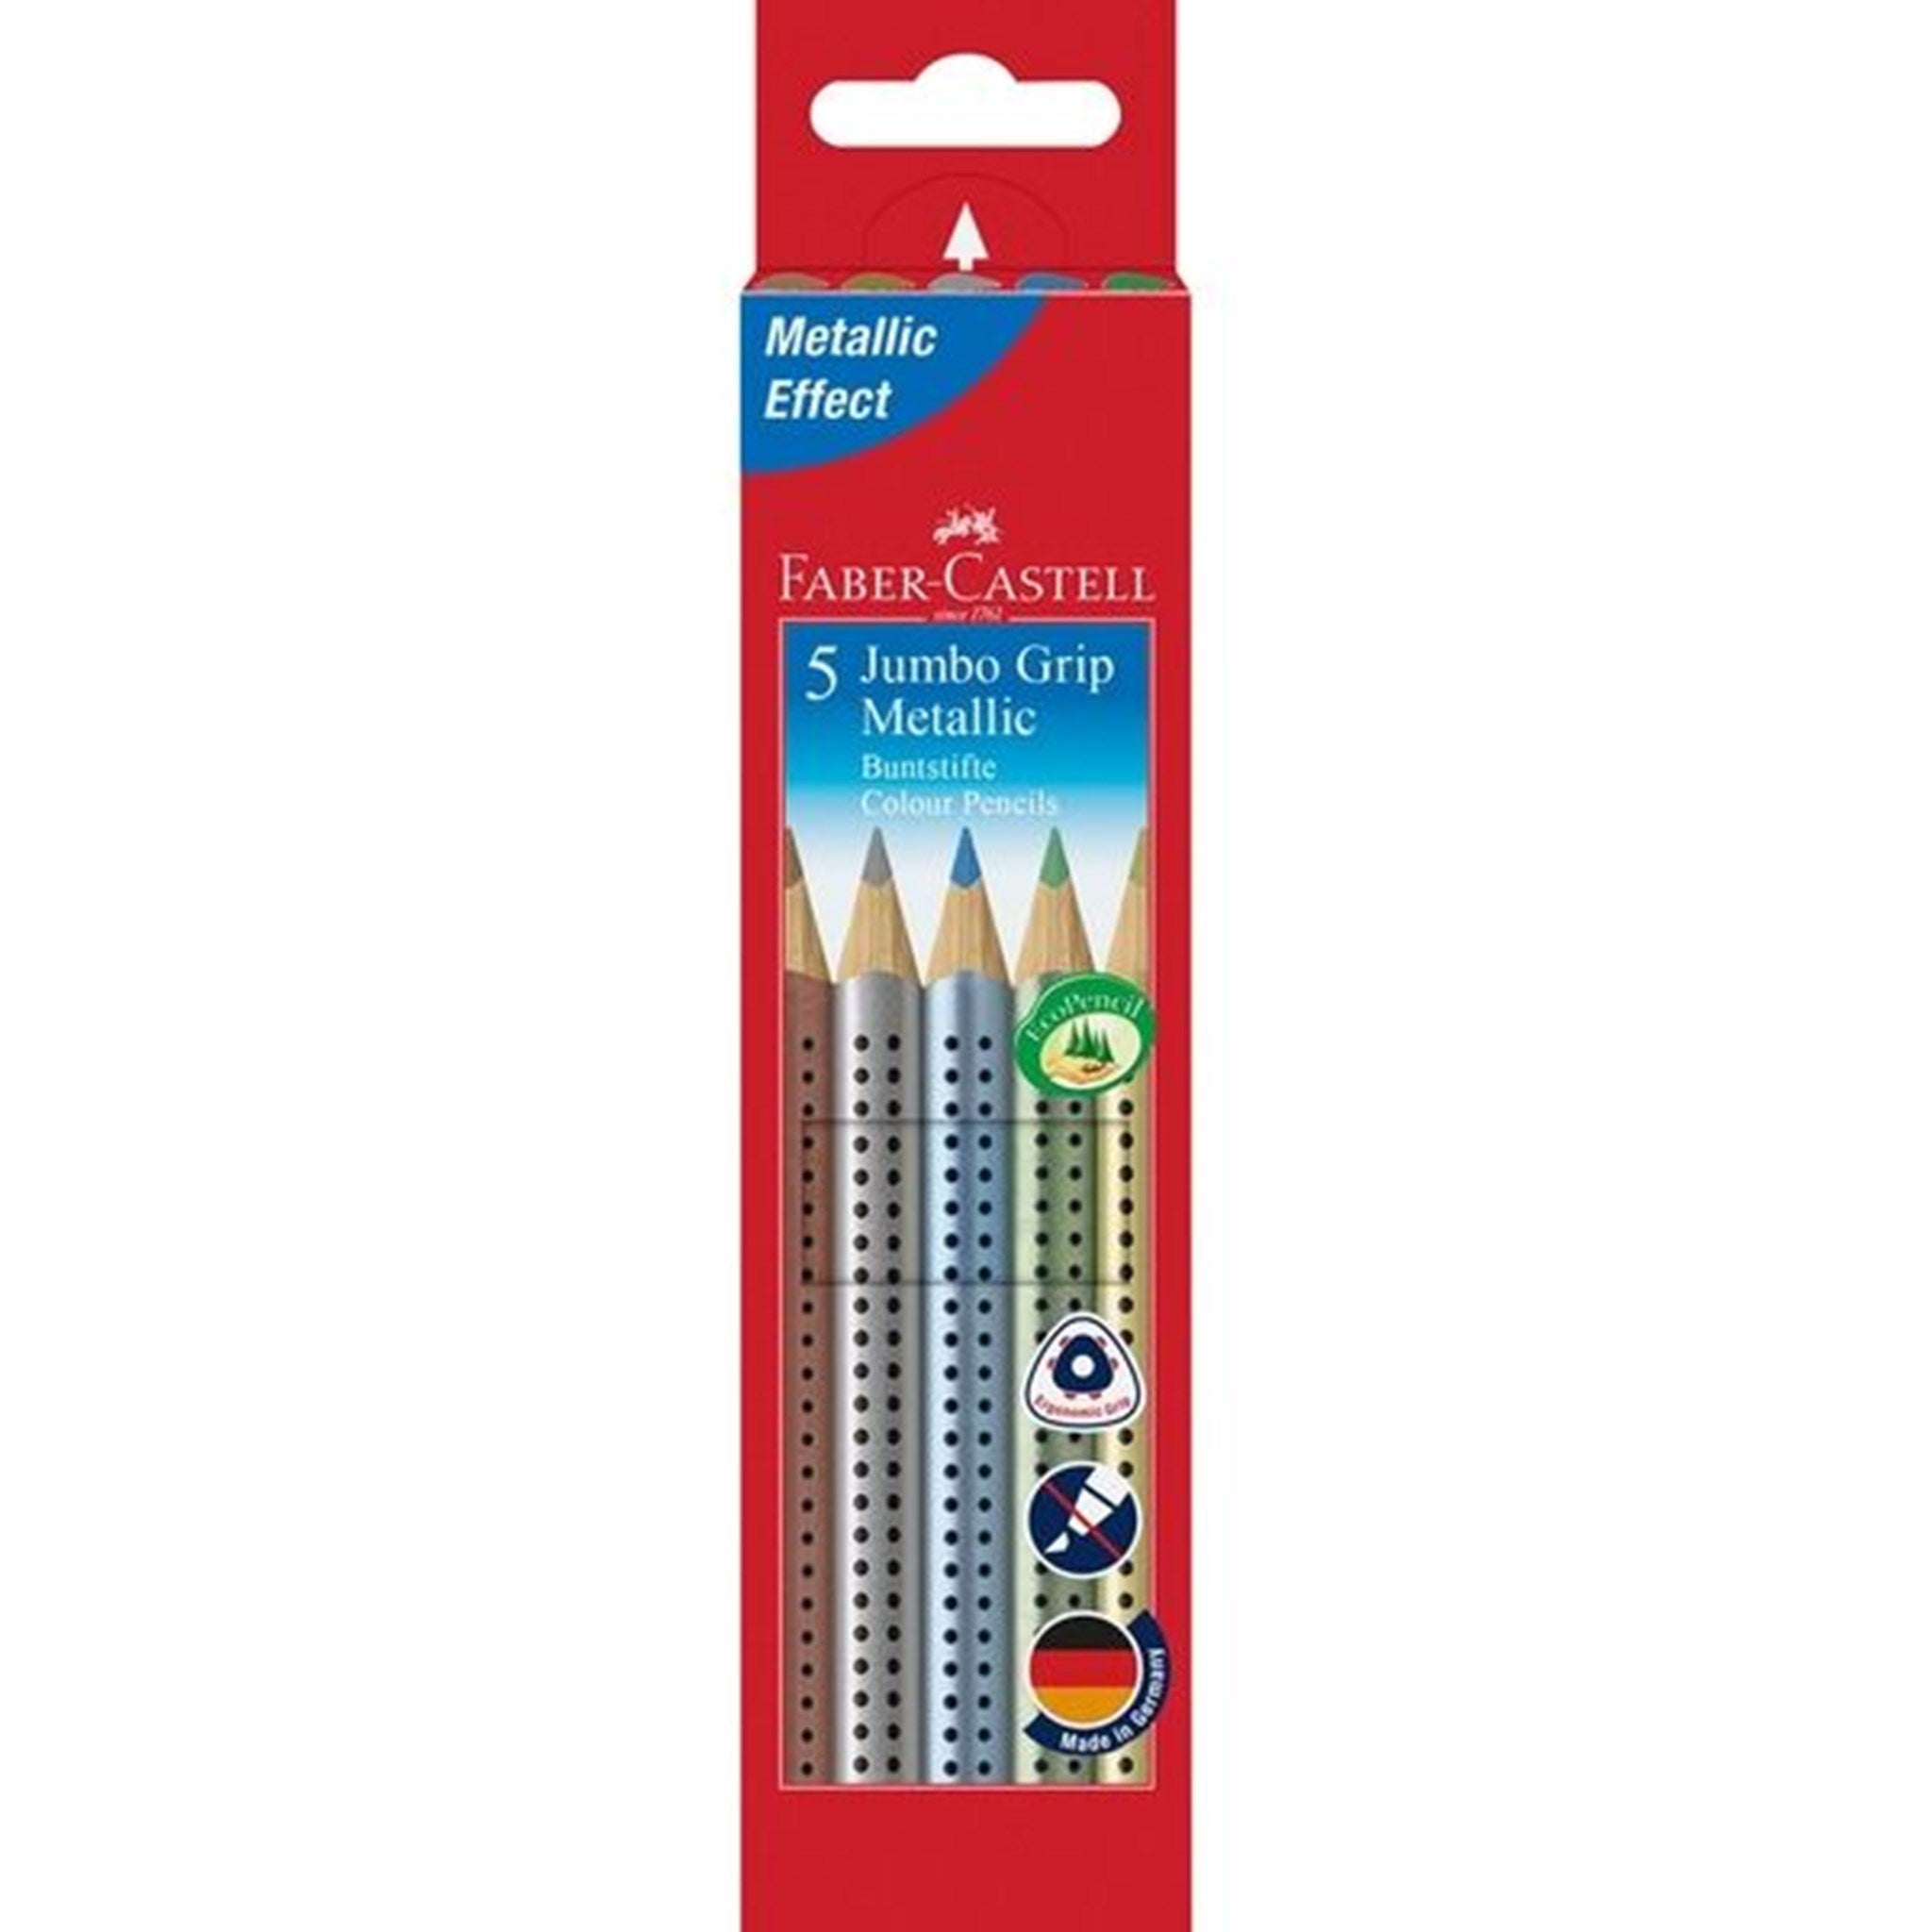 Faber Castell Jumbo Grip Thick 5 Metallic Pencils